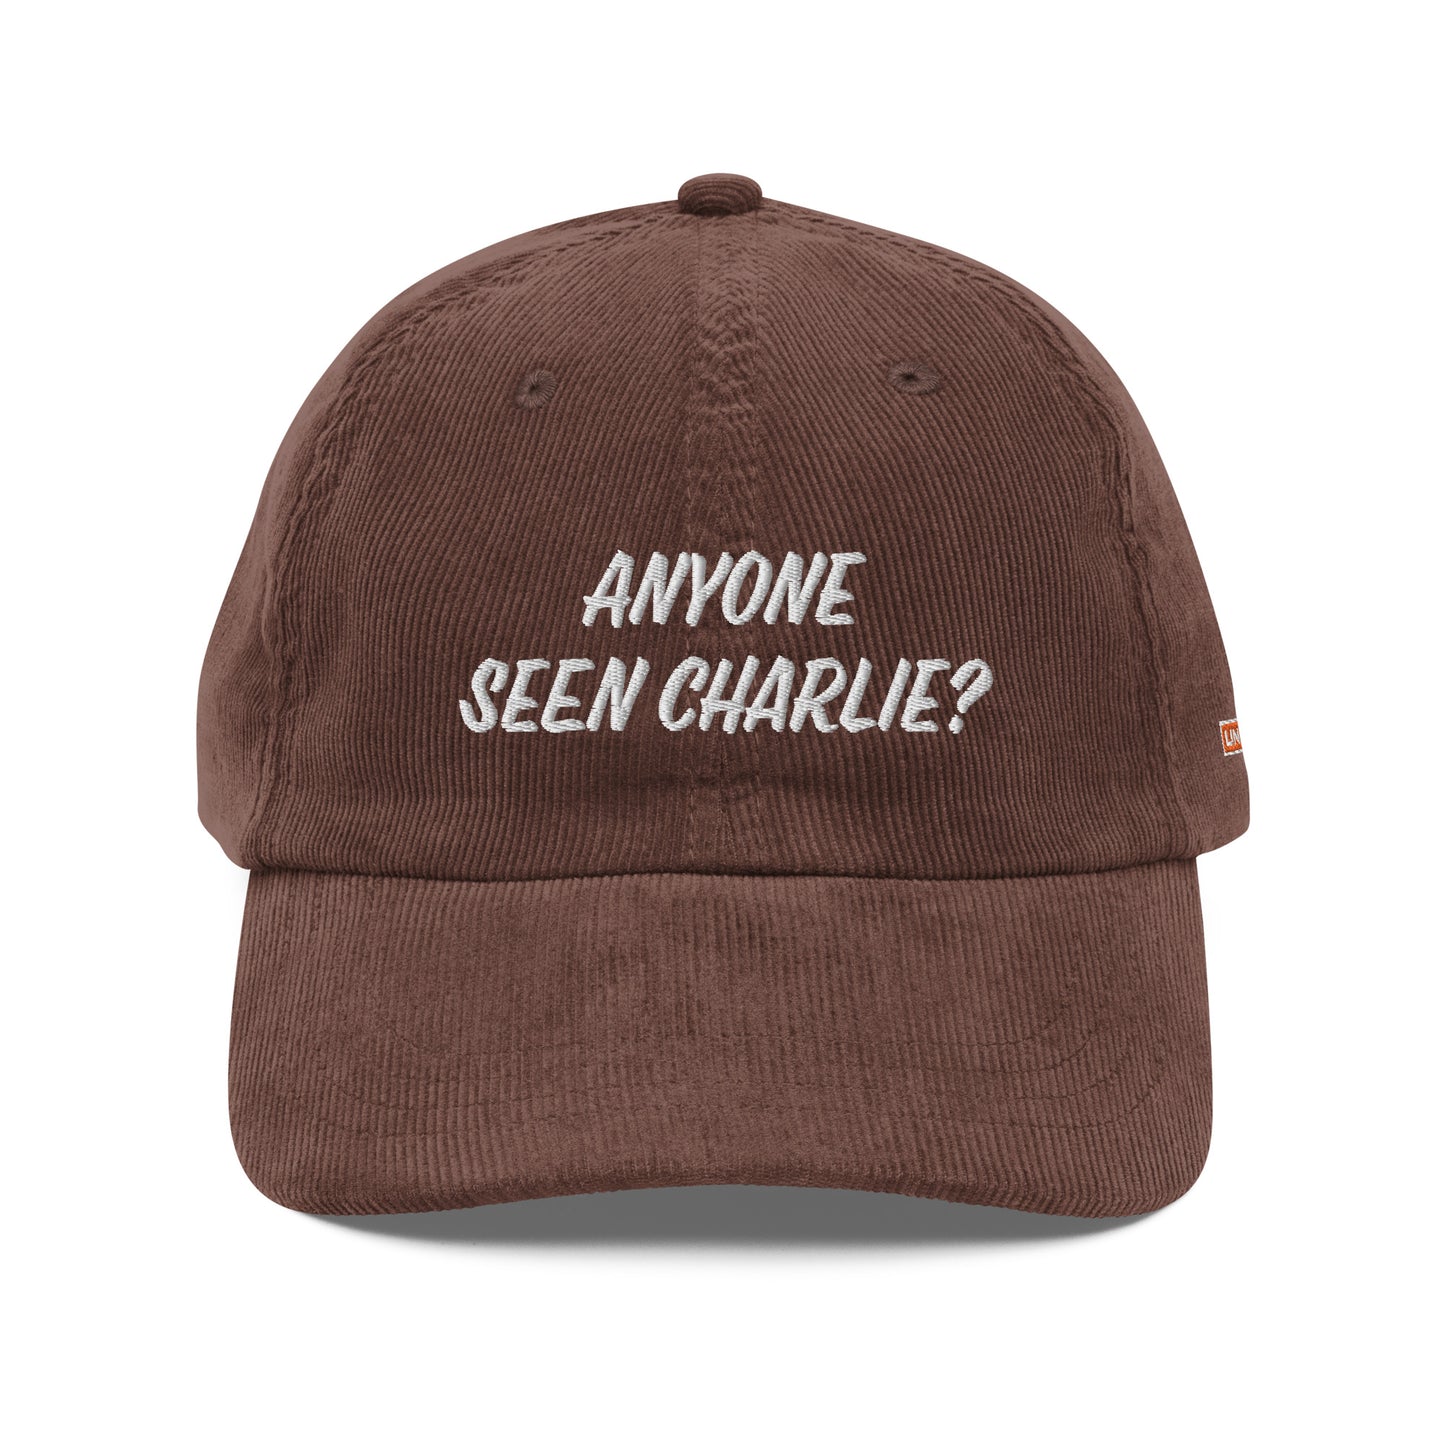 Unhinged | Corduroy Cap - Anyone Seen Charlie?